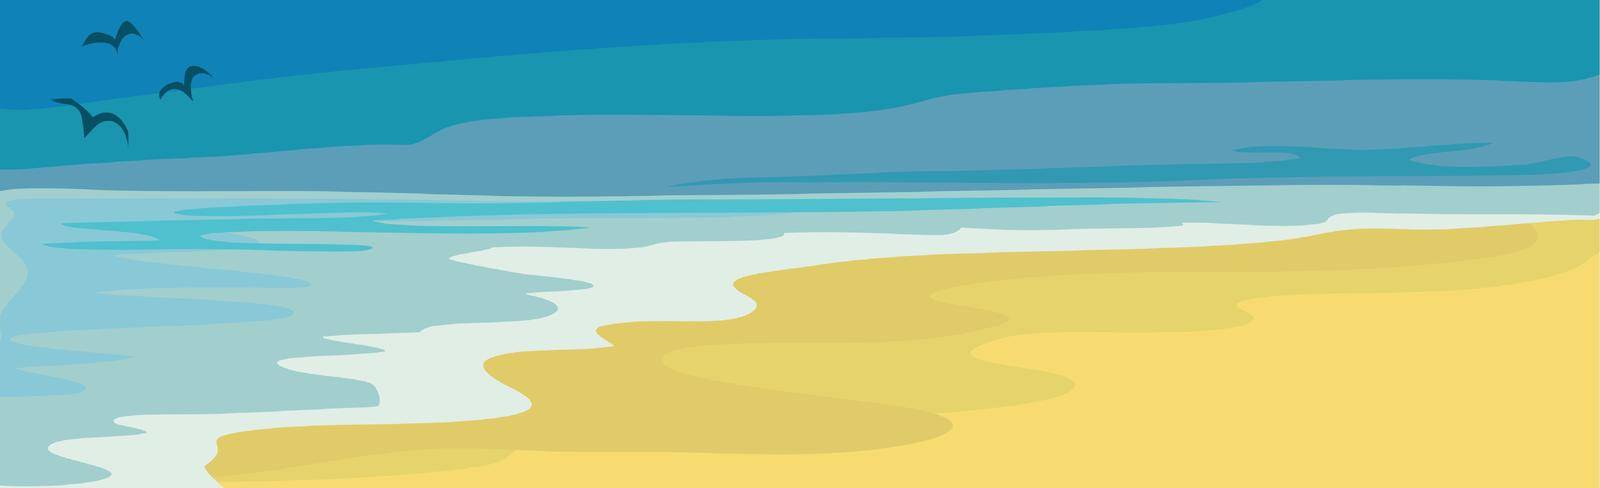 Illustration of a sunny sandy beach and blue sea - illustration